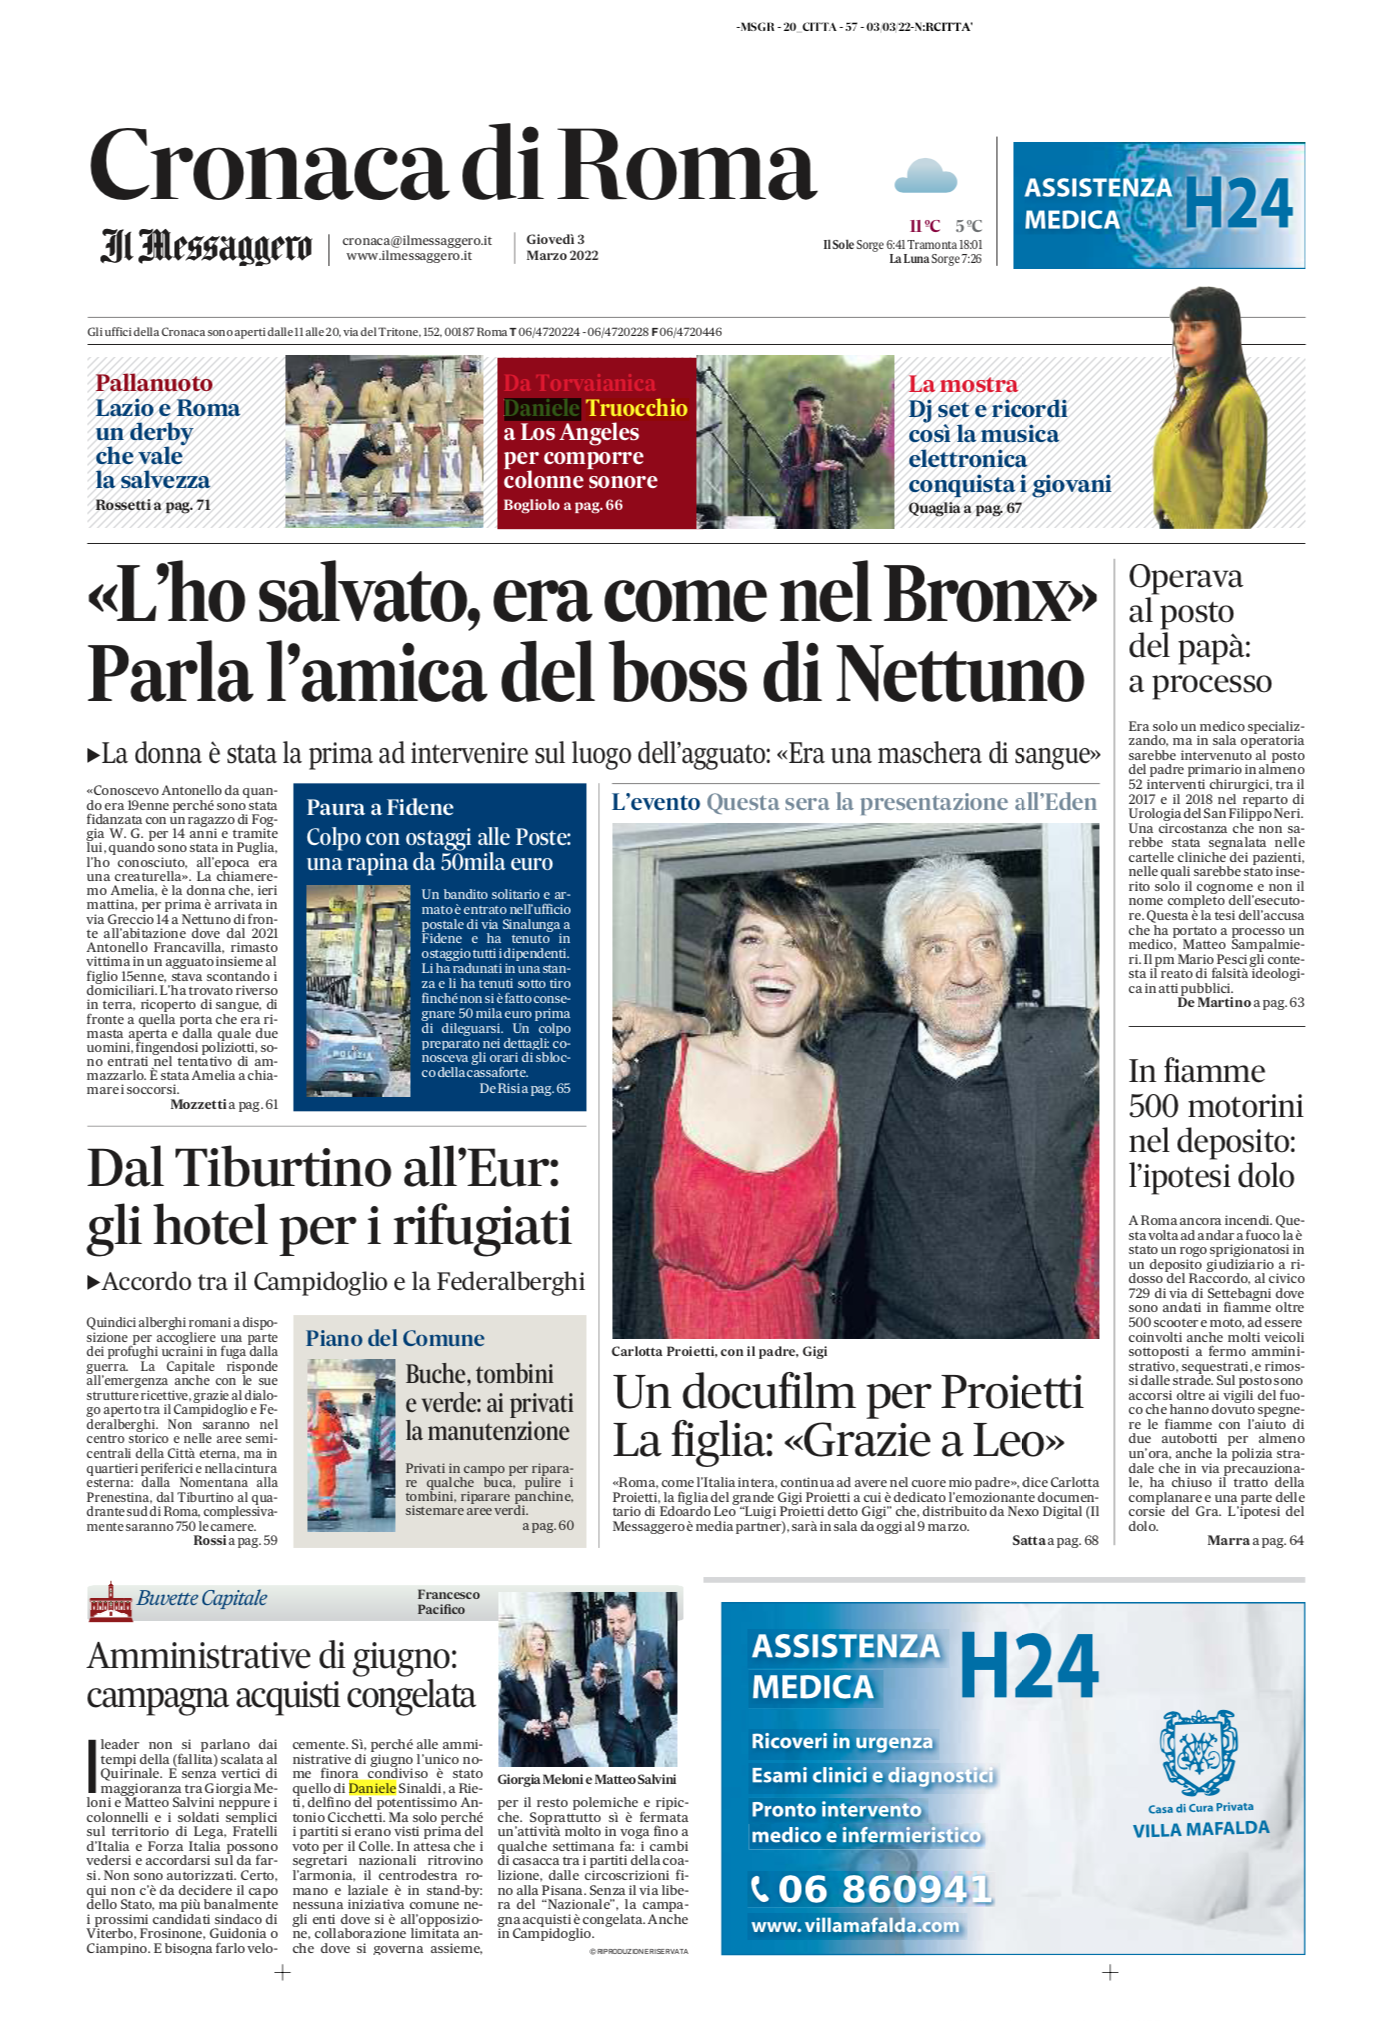 Il Messaggero Front Page - March 3, 2022